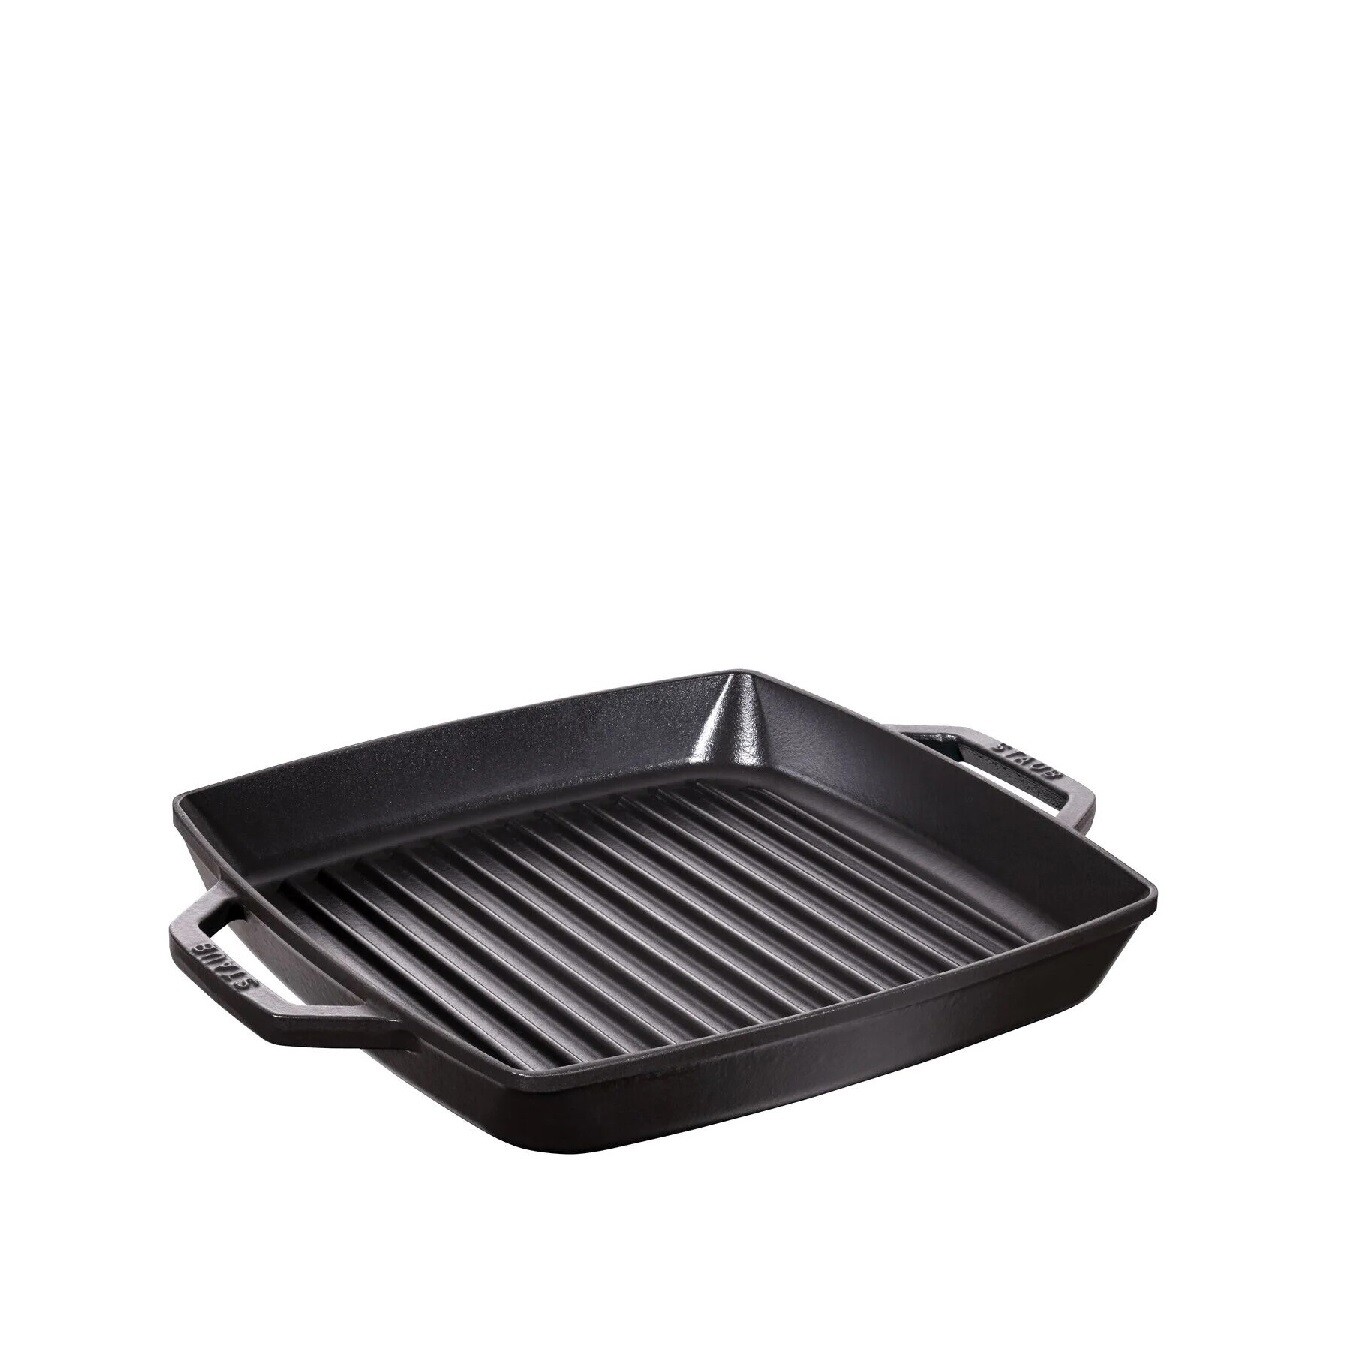 STAUB 'grill pans' gietijzeren grillpan 28cm zwart  PROMO 159,00 -20%